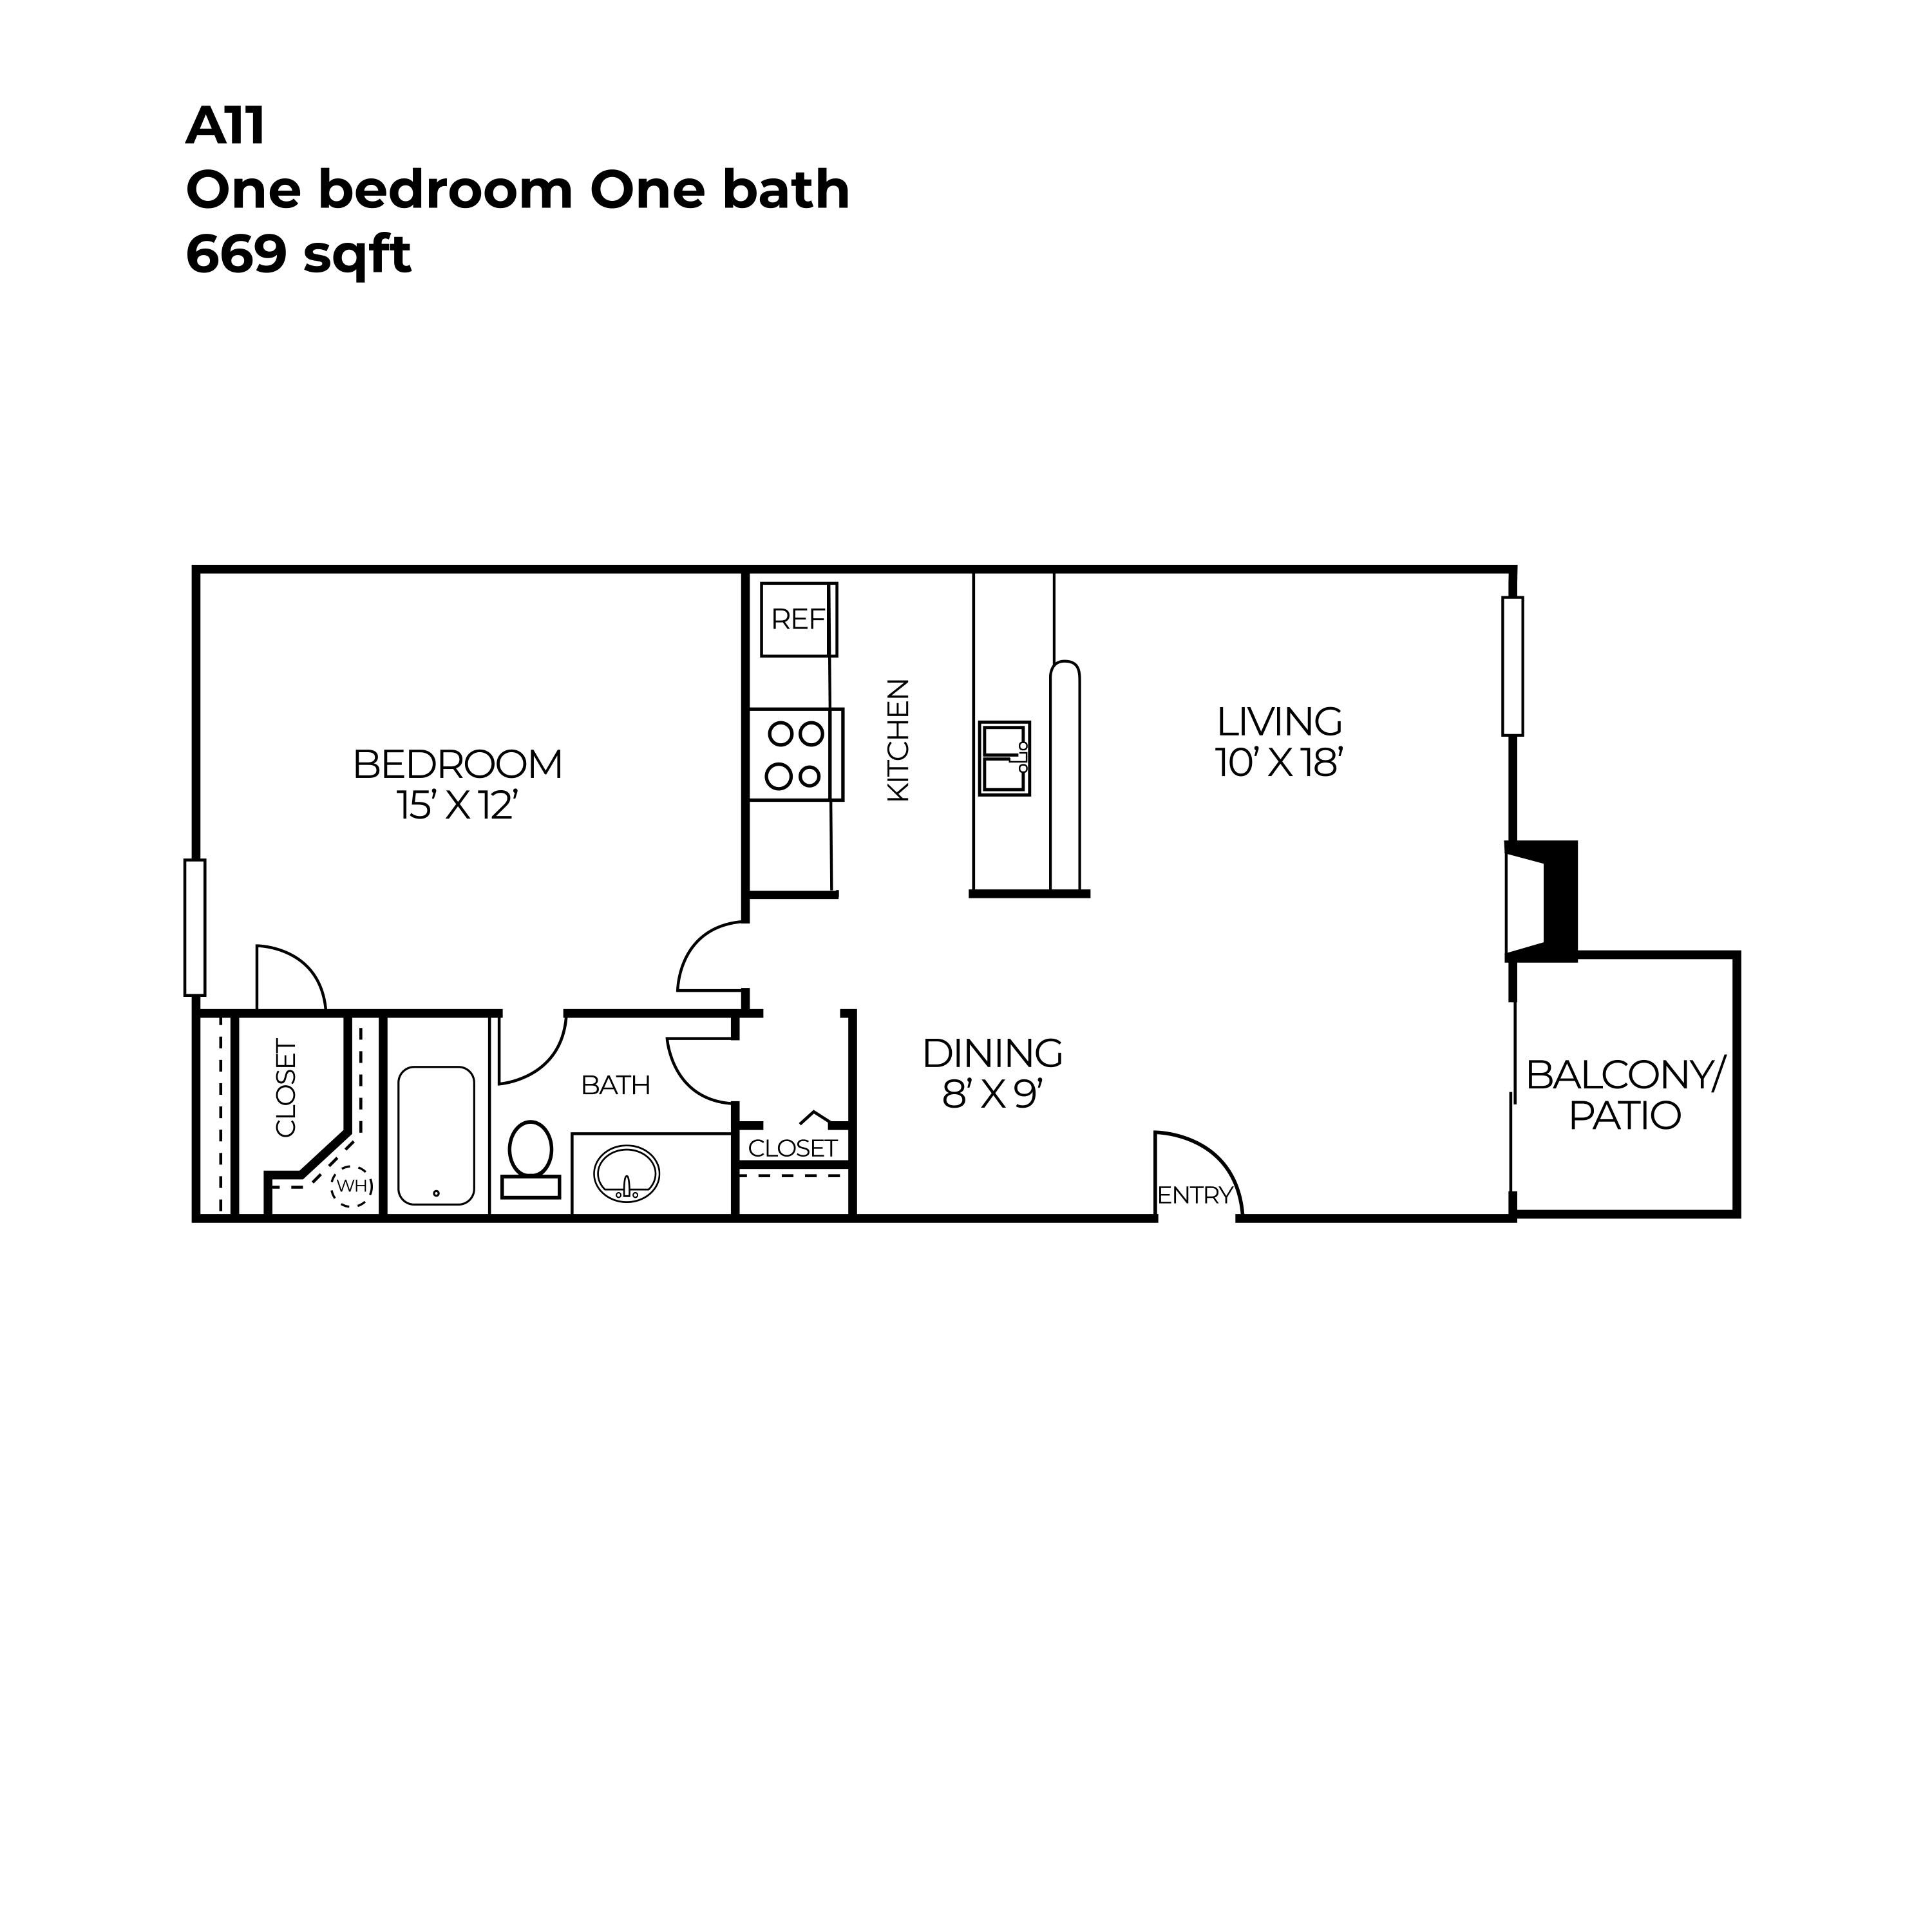 North Star Apartment Homes - Floorplan - A11